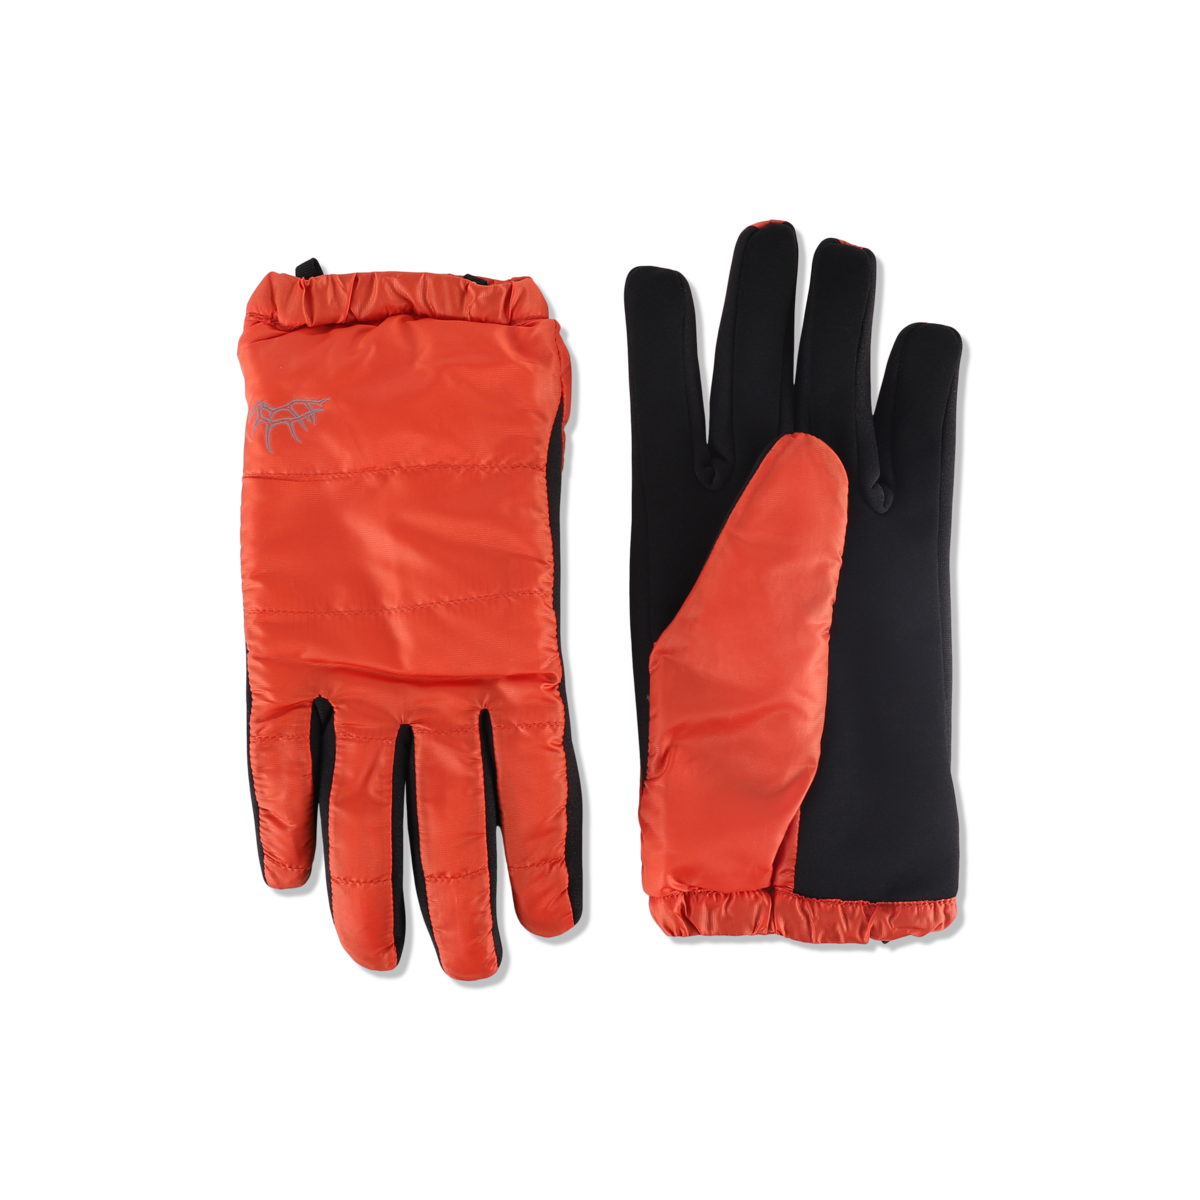 Antler Gloves